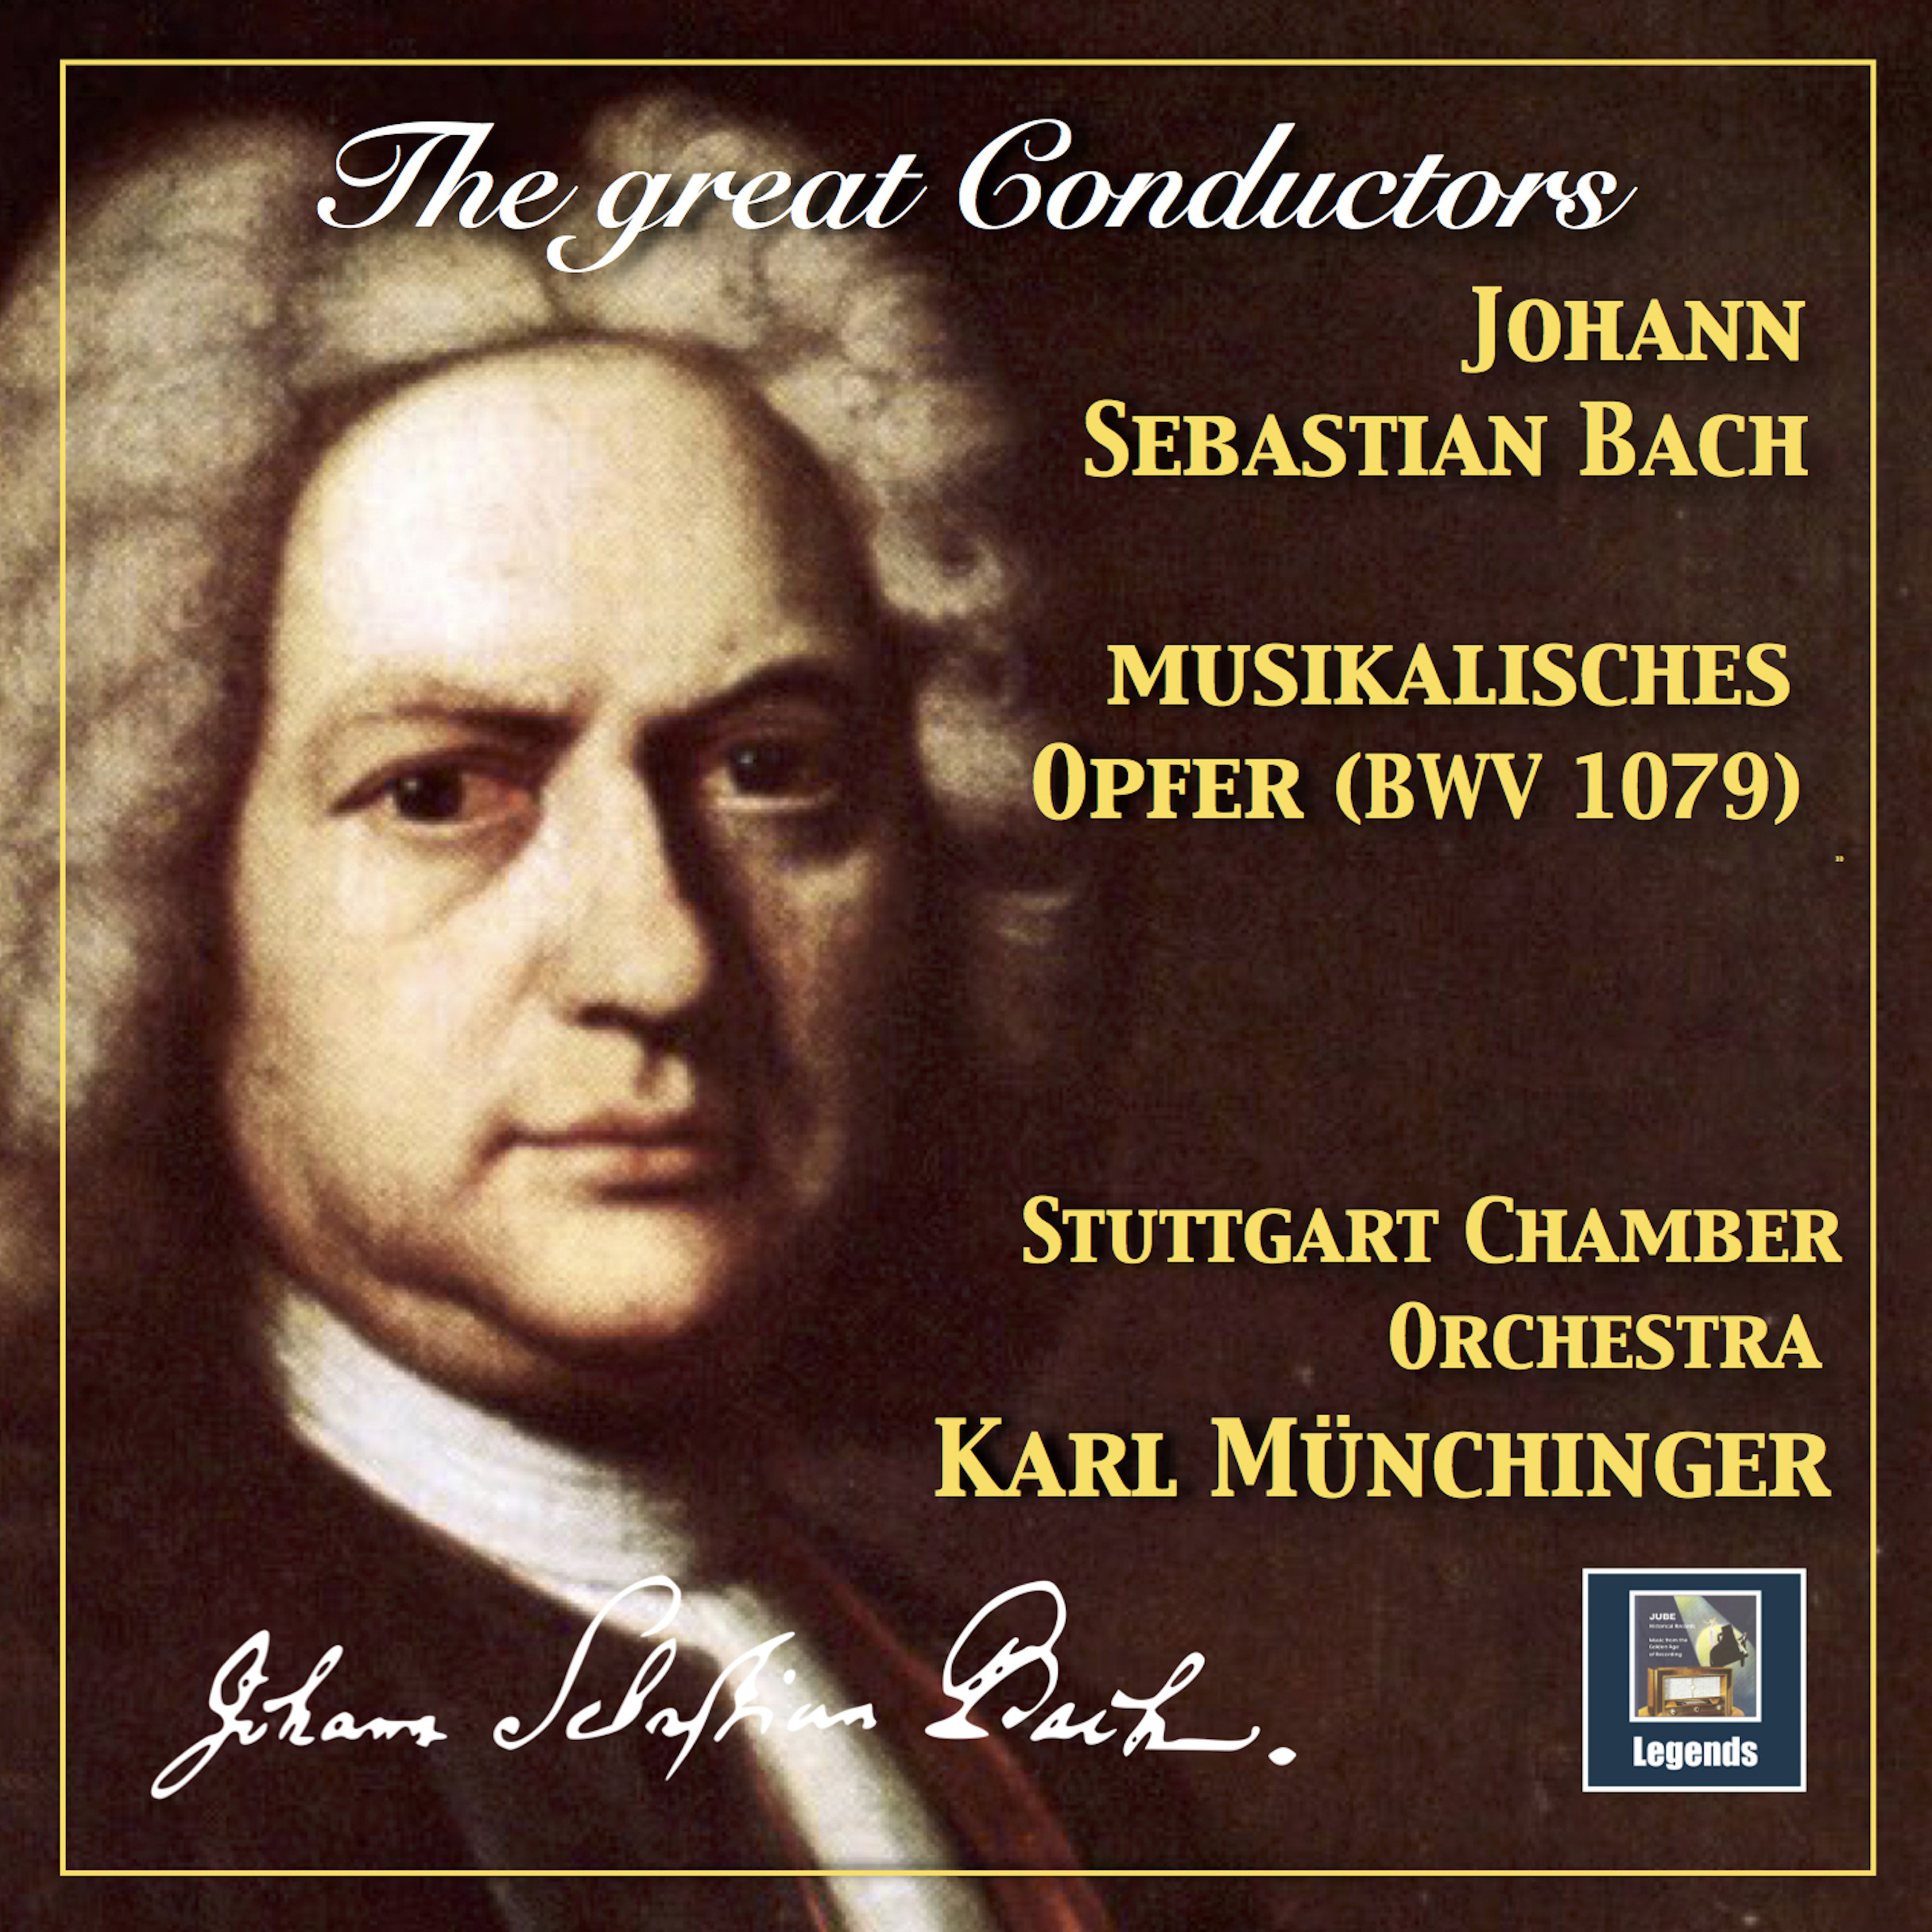 Musikalisches Opfer, BWV 1079 (Arr. K. Münchinger for Chamber Orchestra): Sonata à 3, Largo